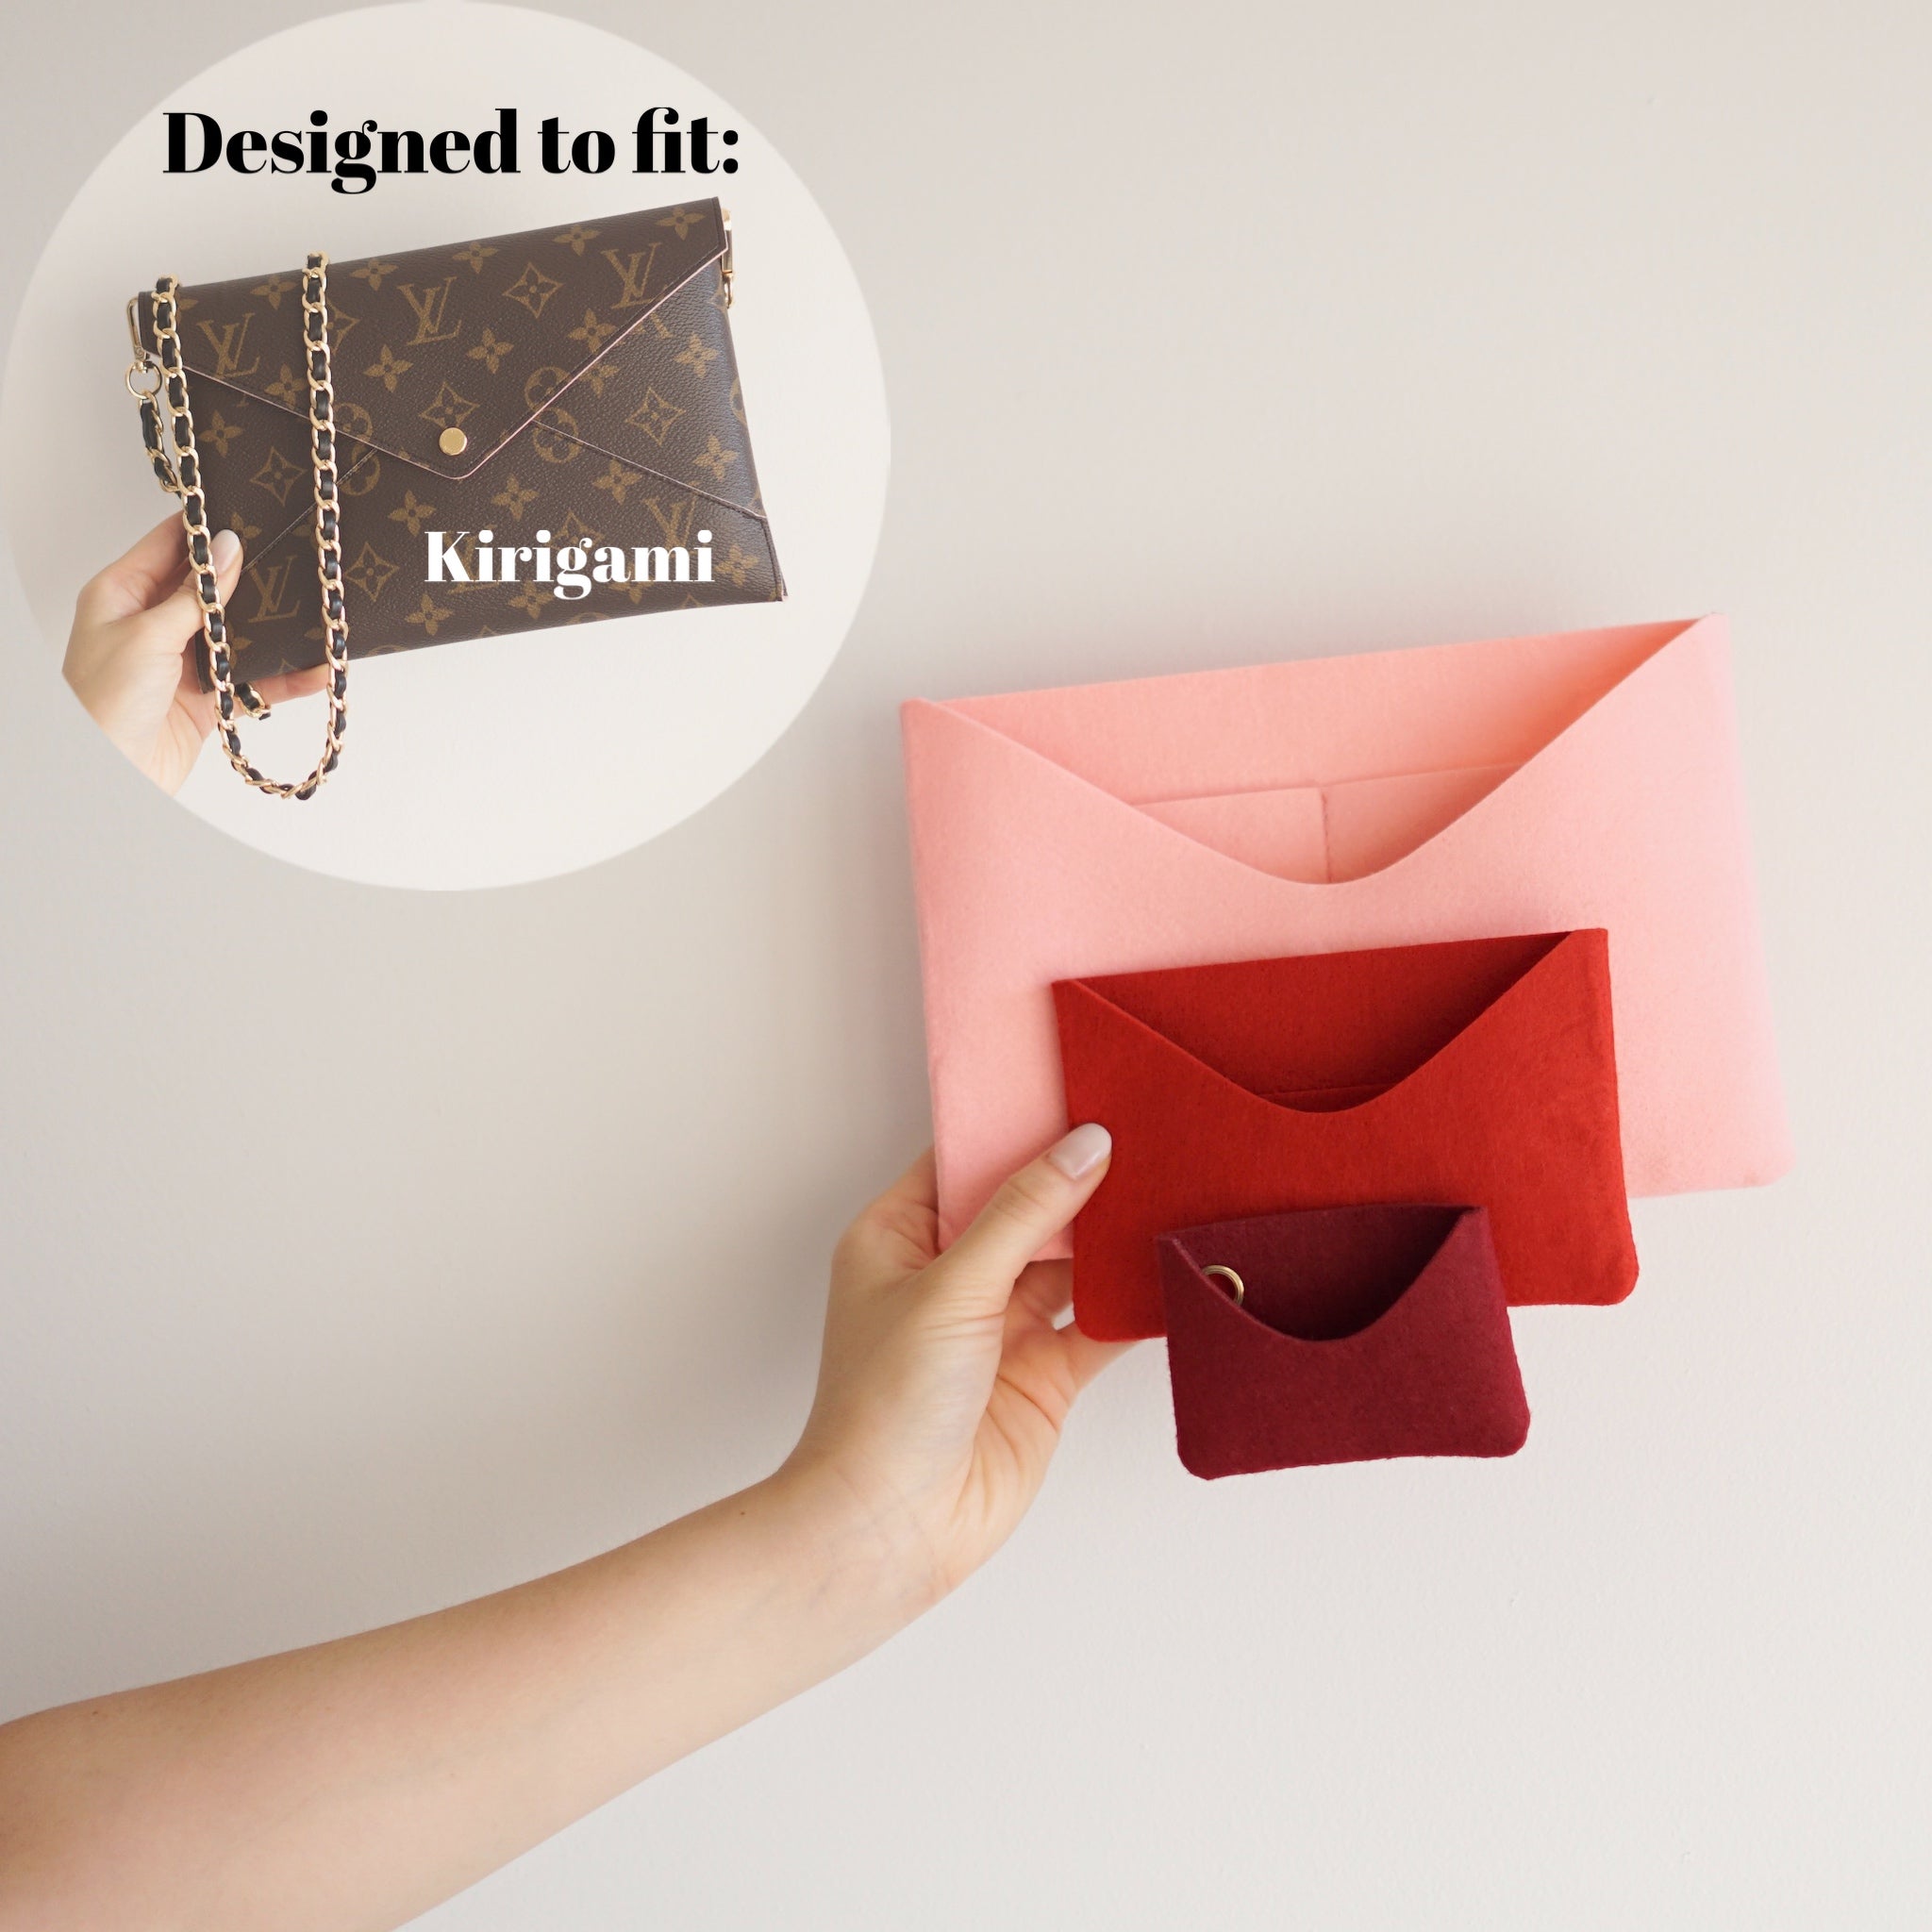 Louis Vuitton Kirigami Monogram Pouch Set - WHAT FITS INSIDE